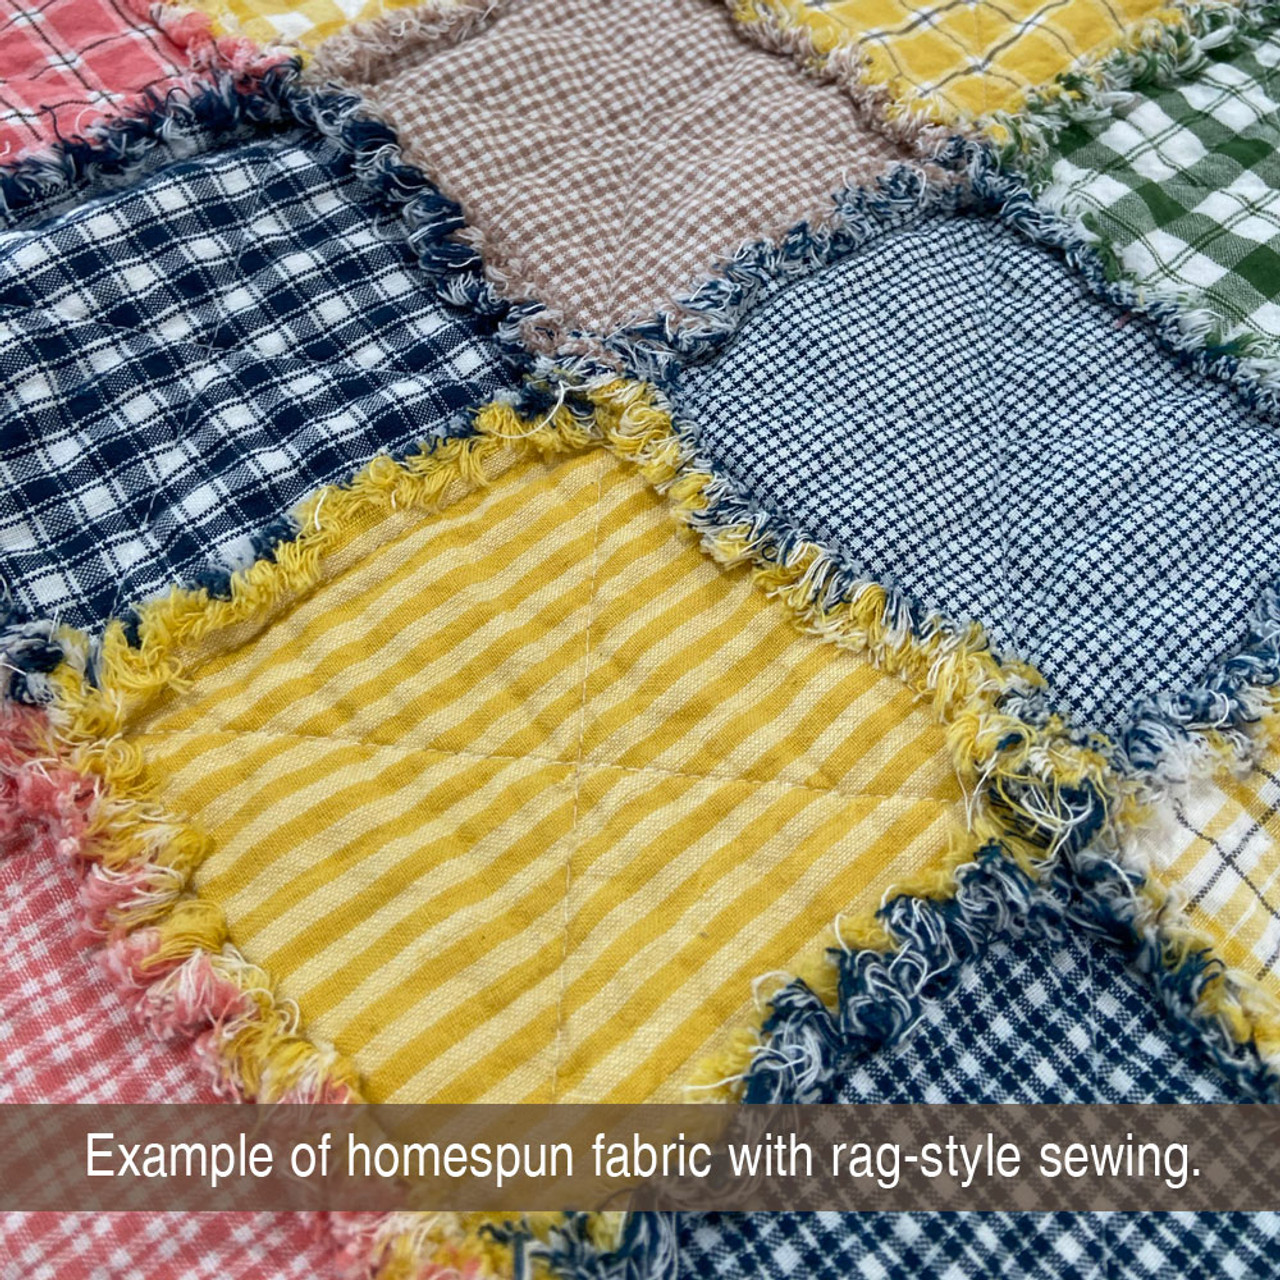 Summer Yellow Stripe Homespun Cotton Fabric